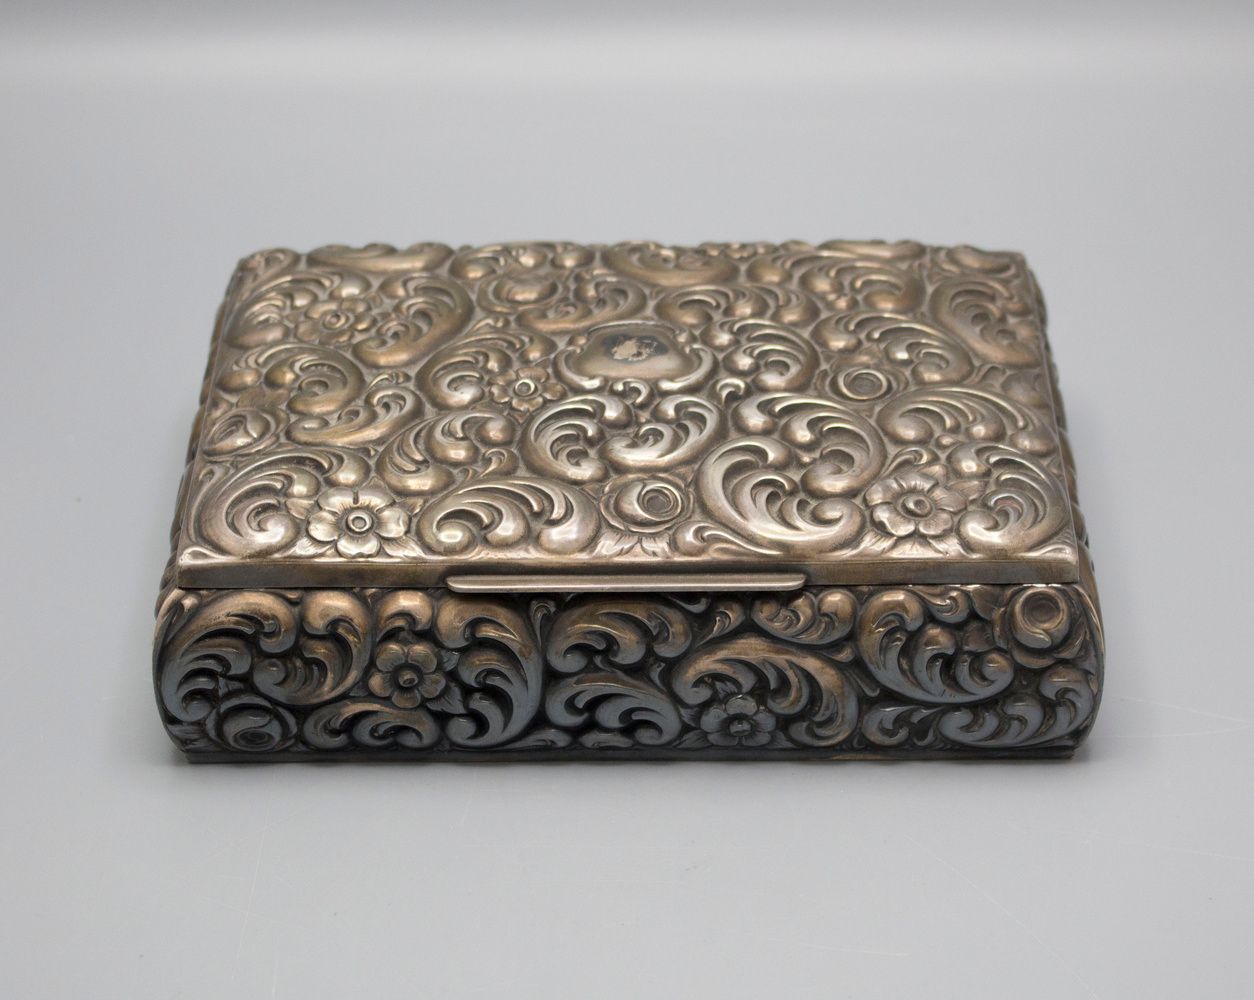 Material: silver 835/000, wood,hallmark: warranty mark, …